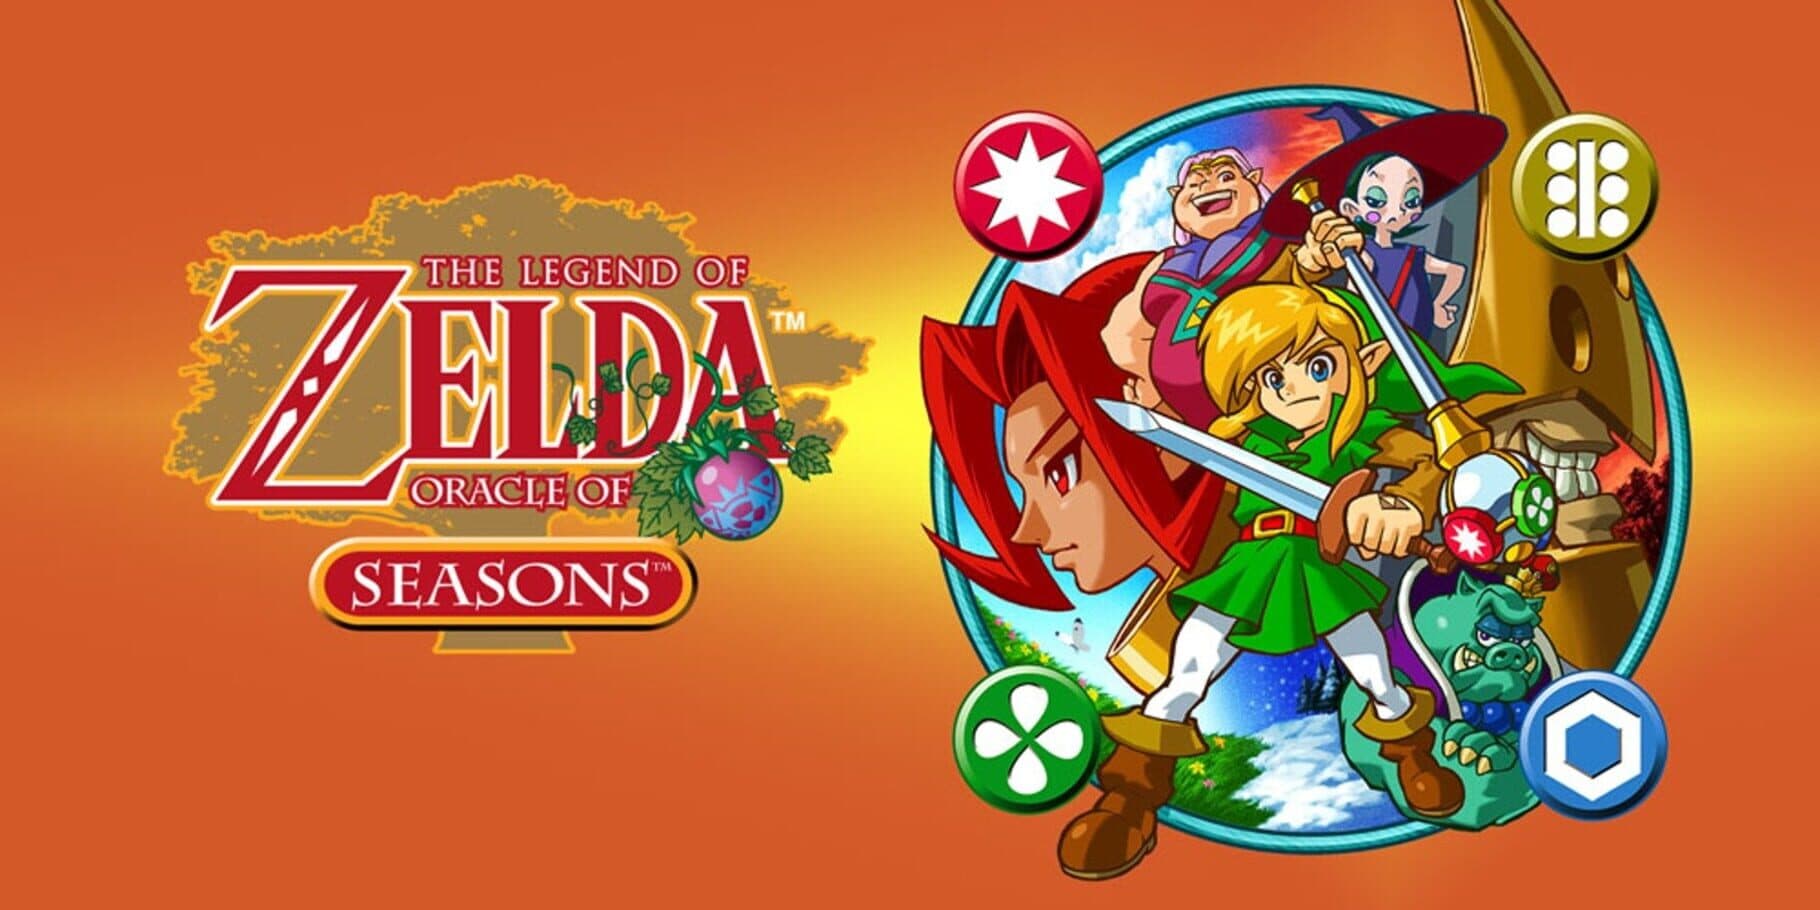 The Legend of Zelda: Oracle of Seasons Image